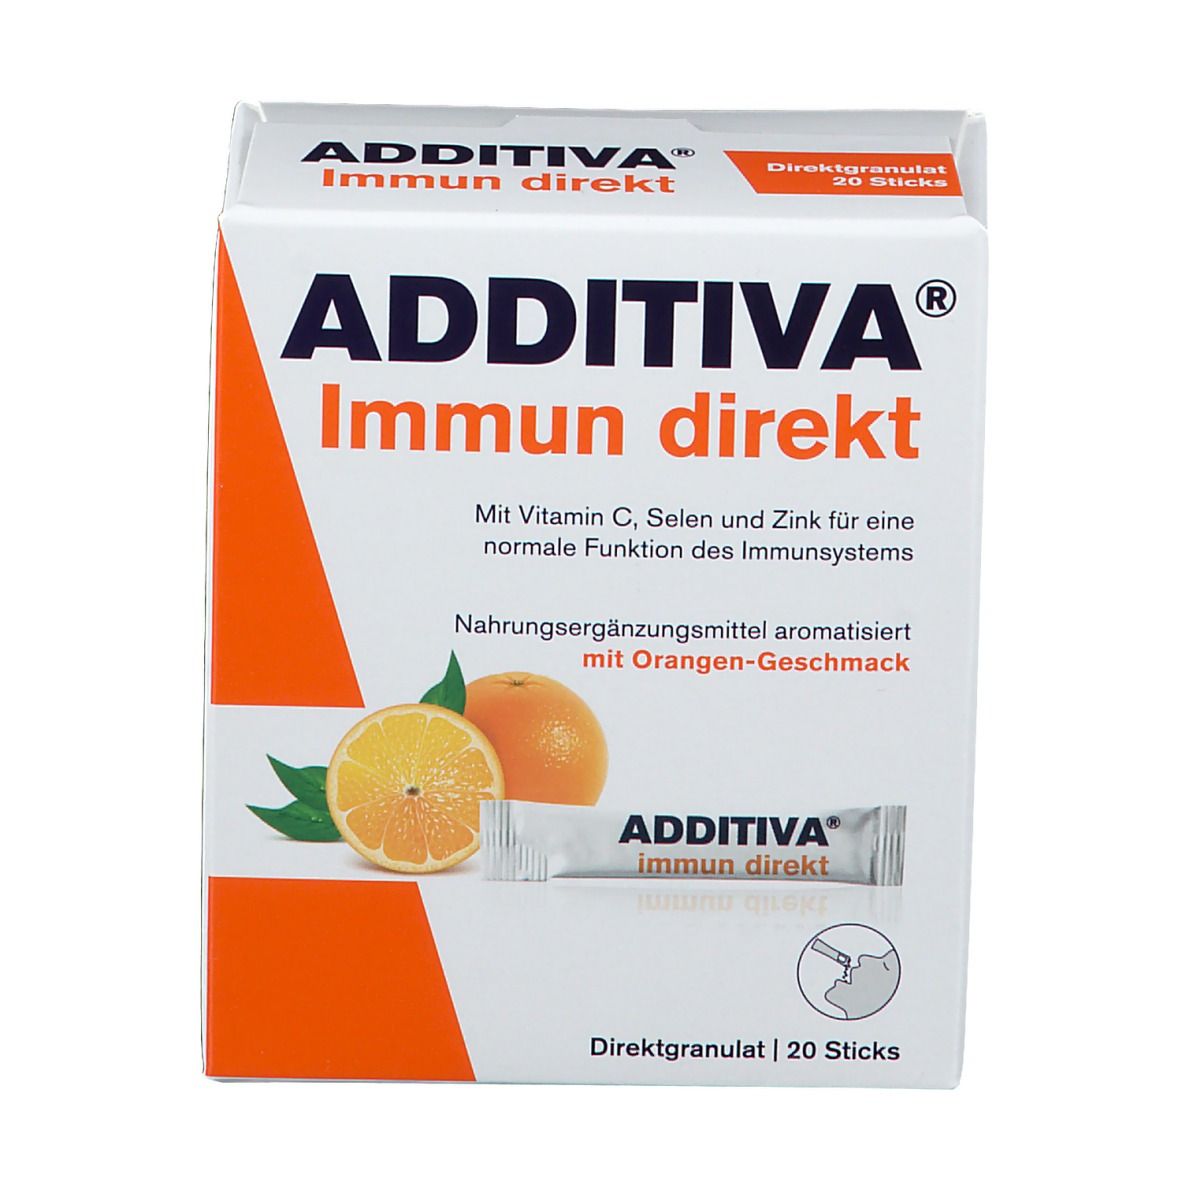 ADDITIVA® Immun direkt